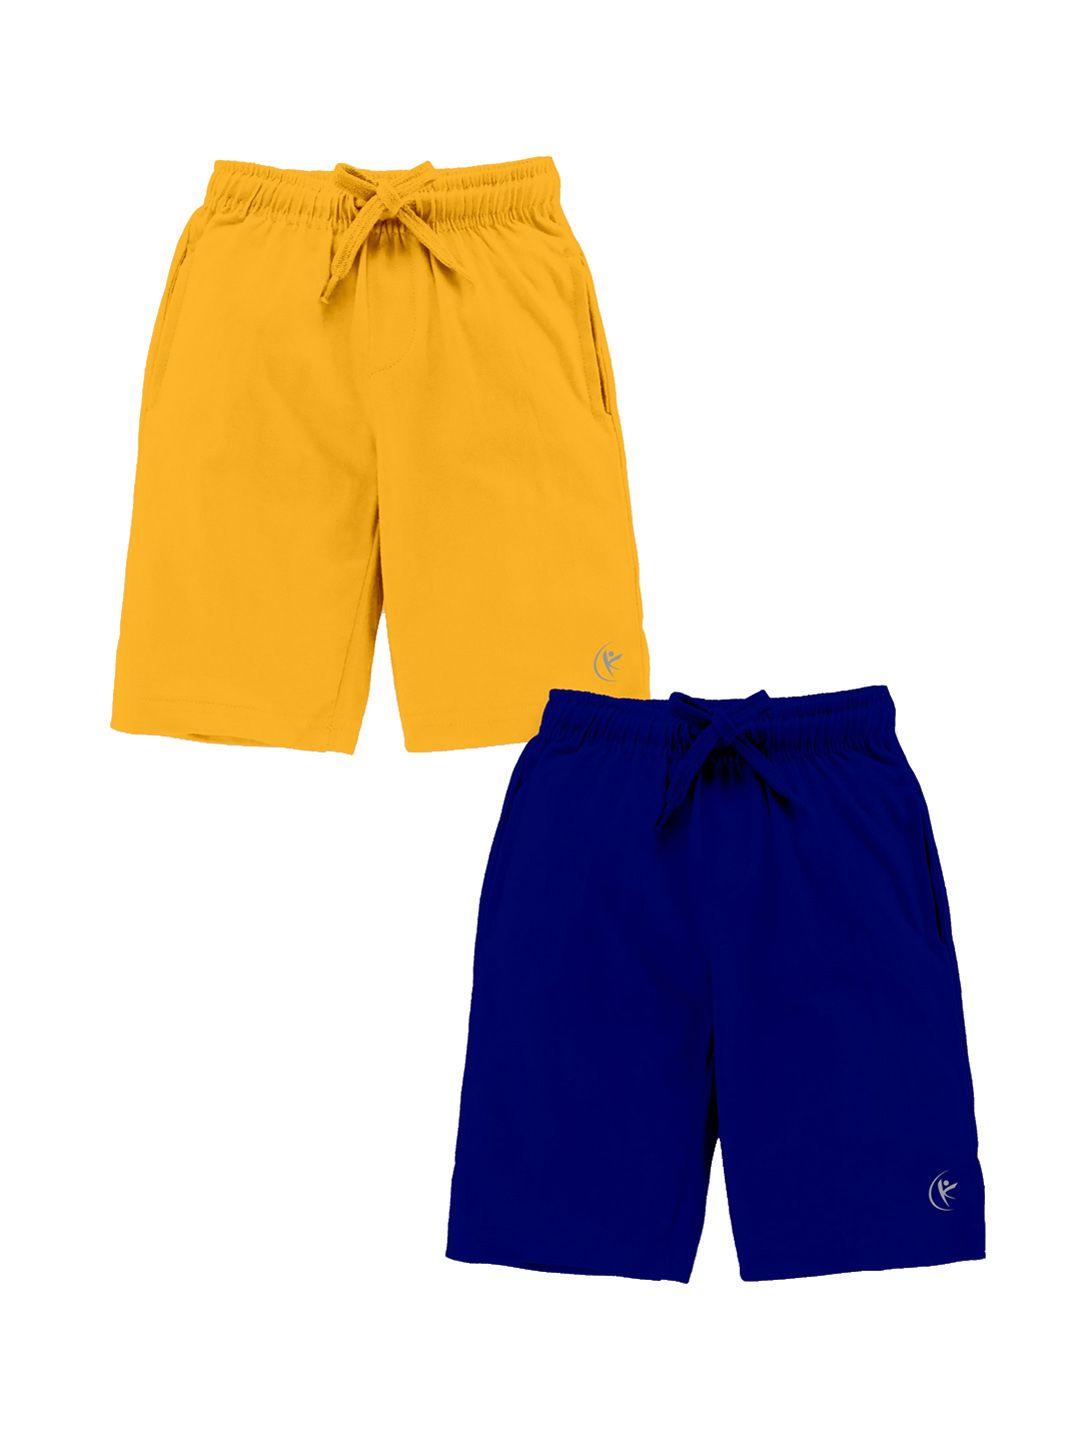 kiddopanti-boys-pack-of-2-cotton-shorts